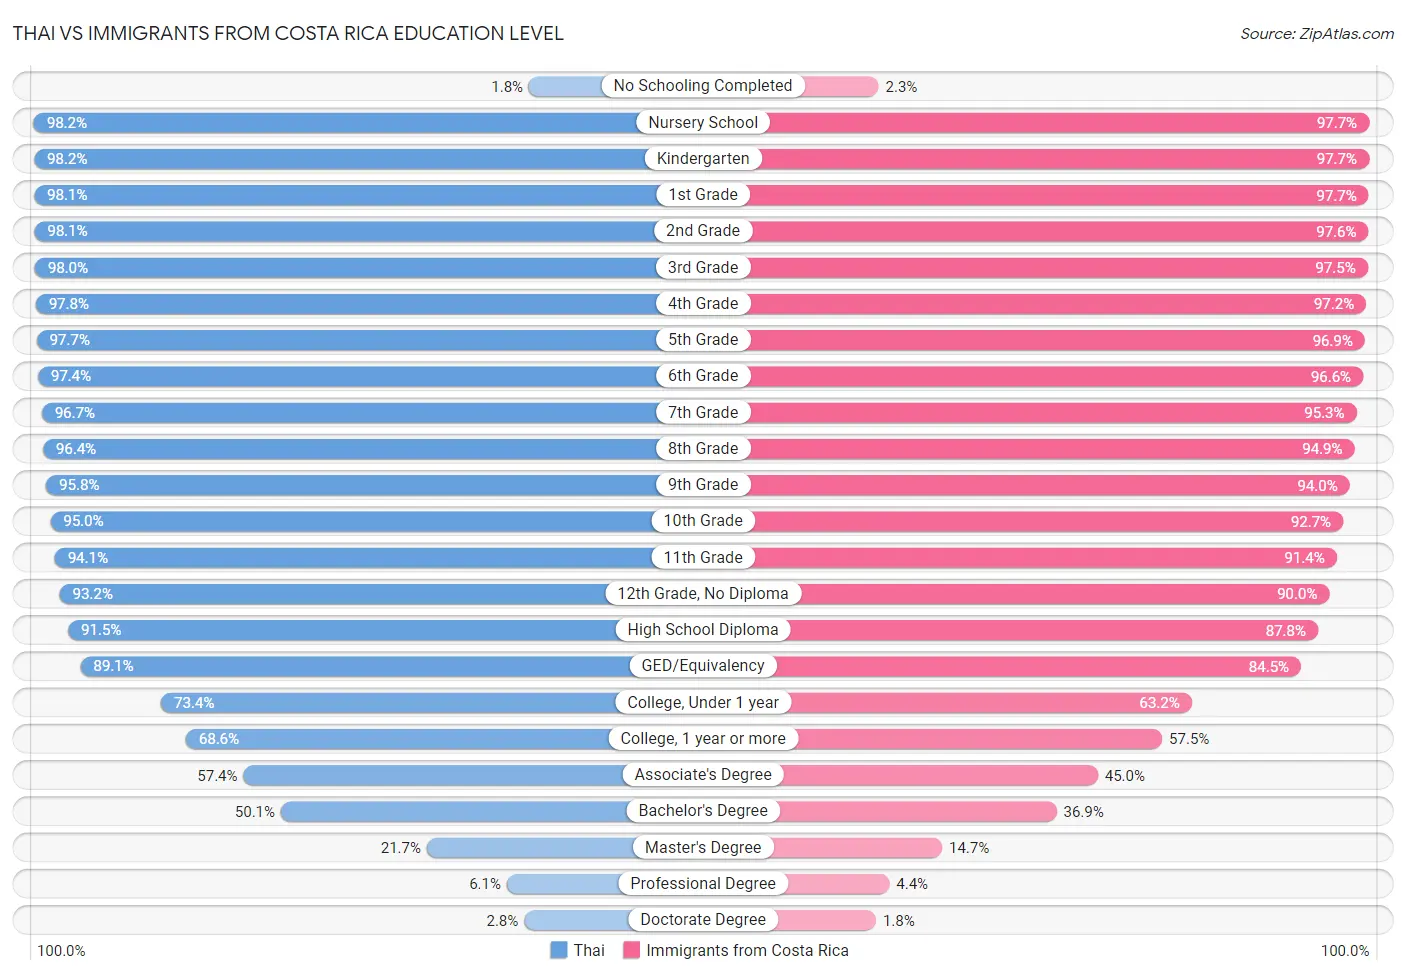 Thai vs Immigrants from Costa Rica Education Level